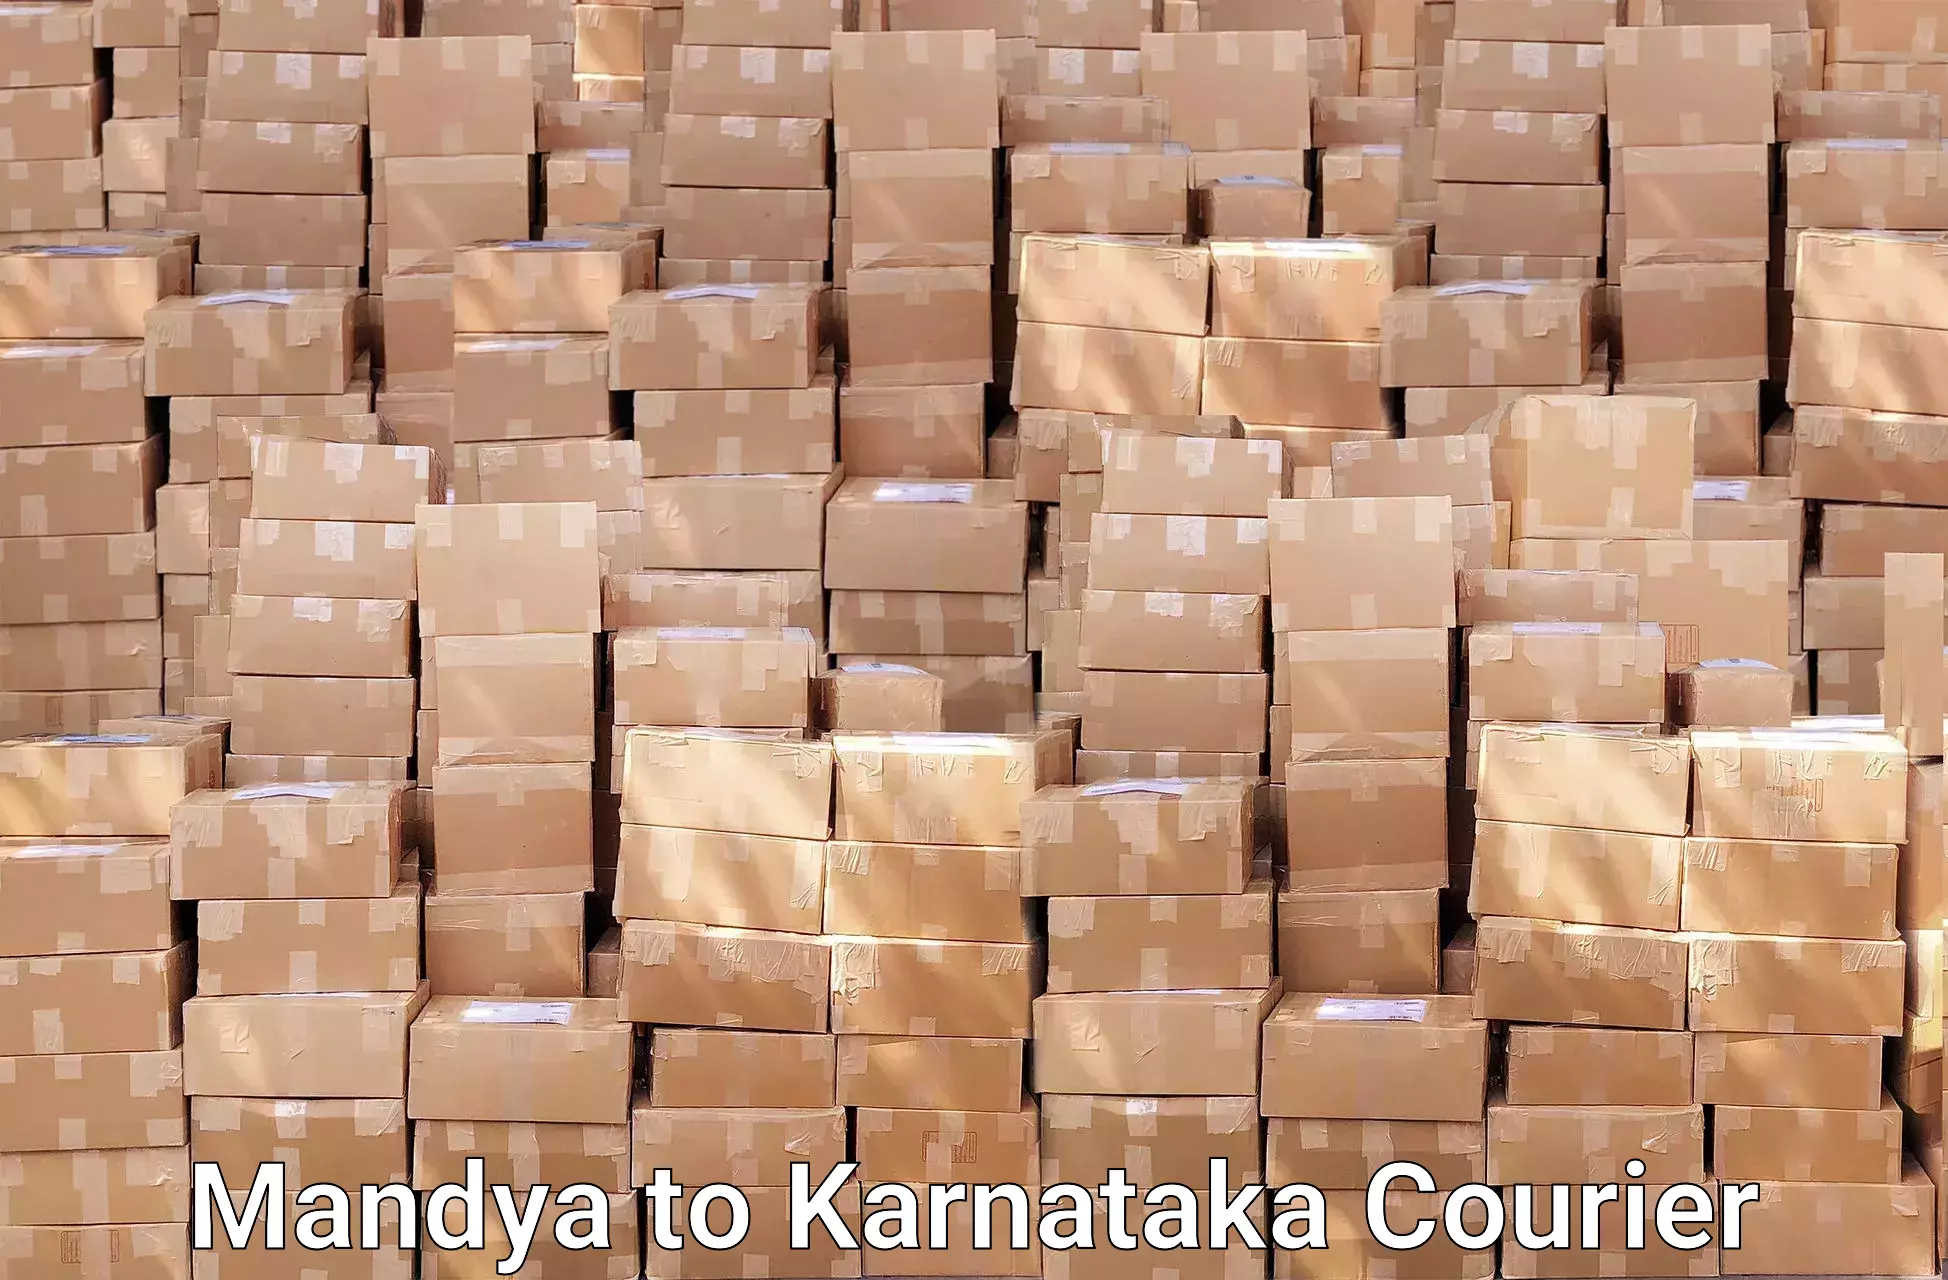 Budget-friendly movers Mandya to Bangalore